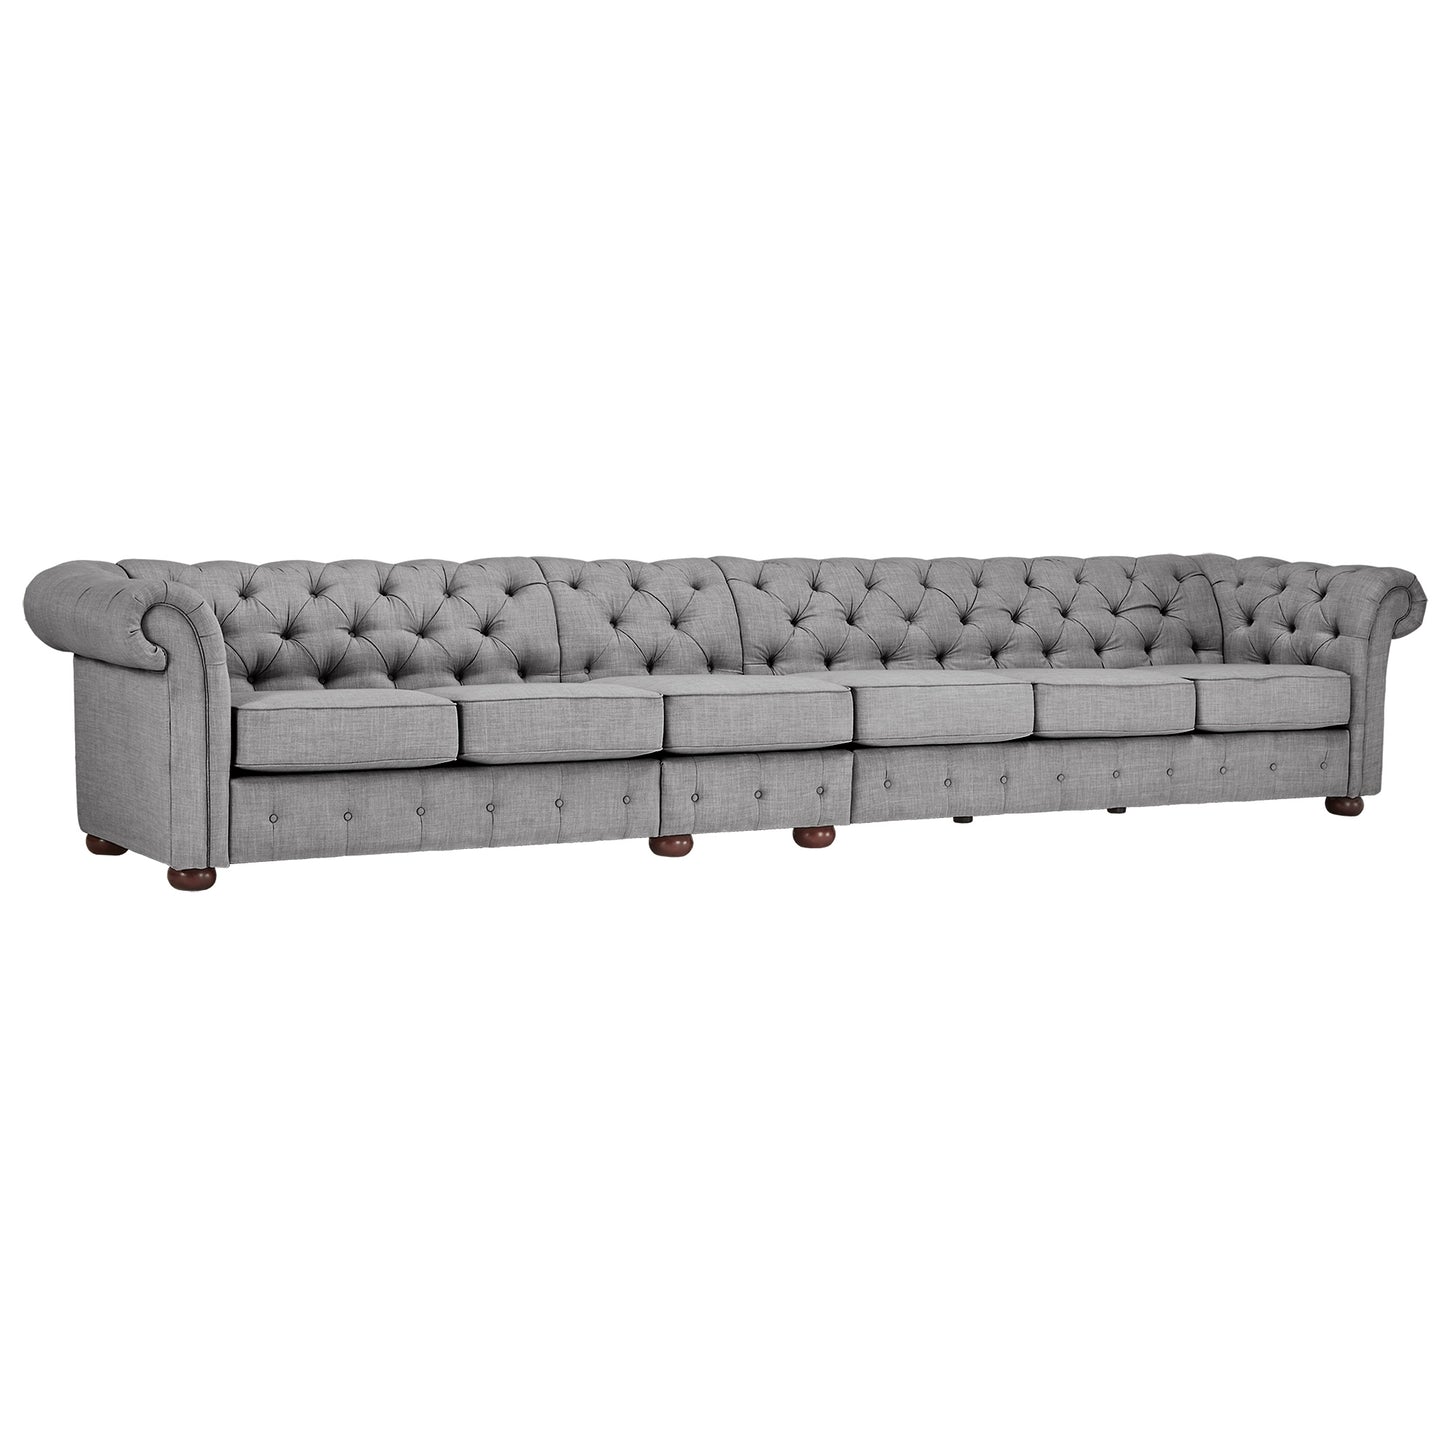 6-Seat Modular Chesterfield Sofa - Grey Linen